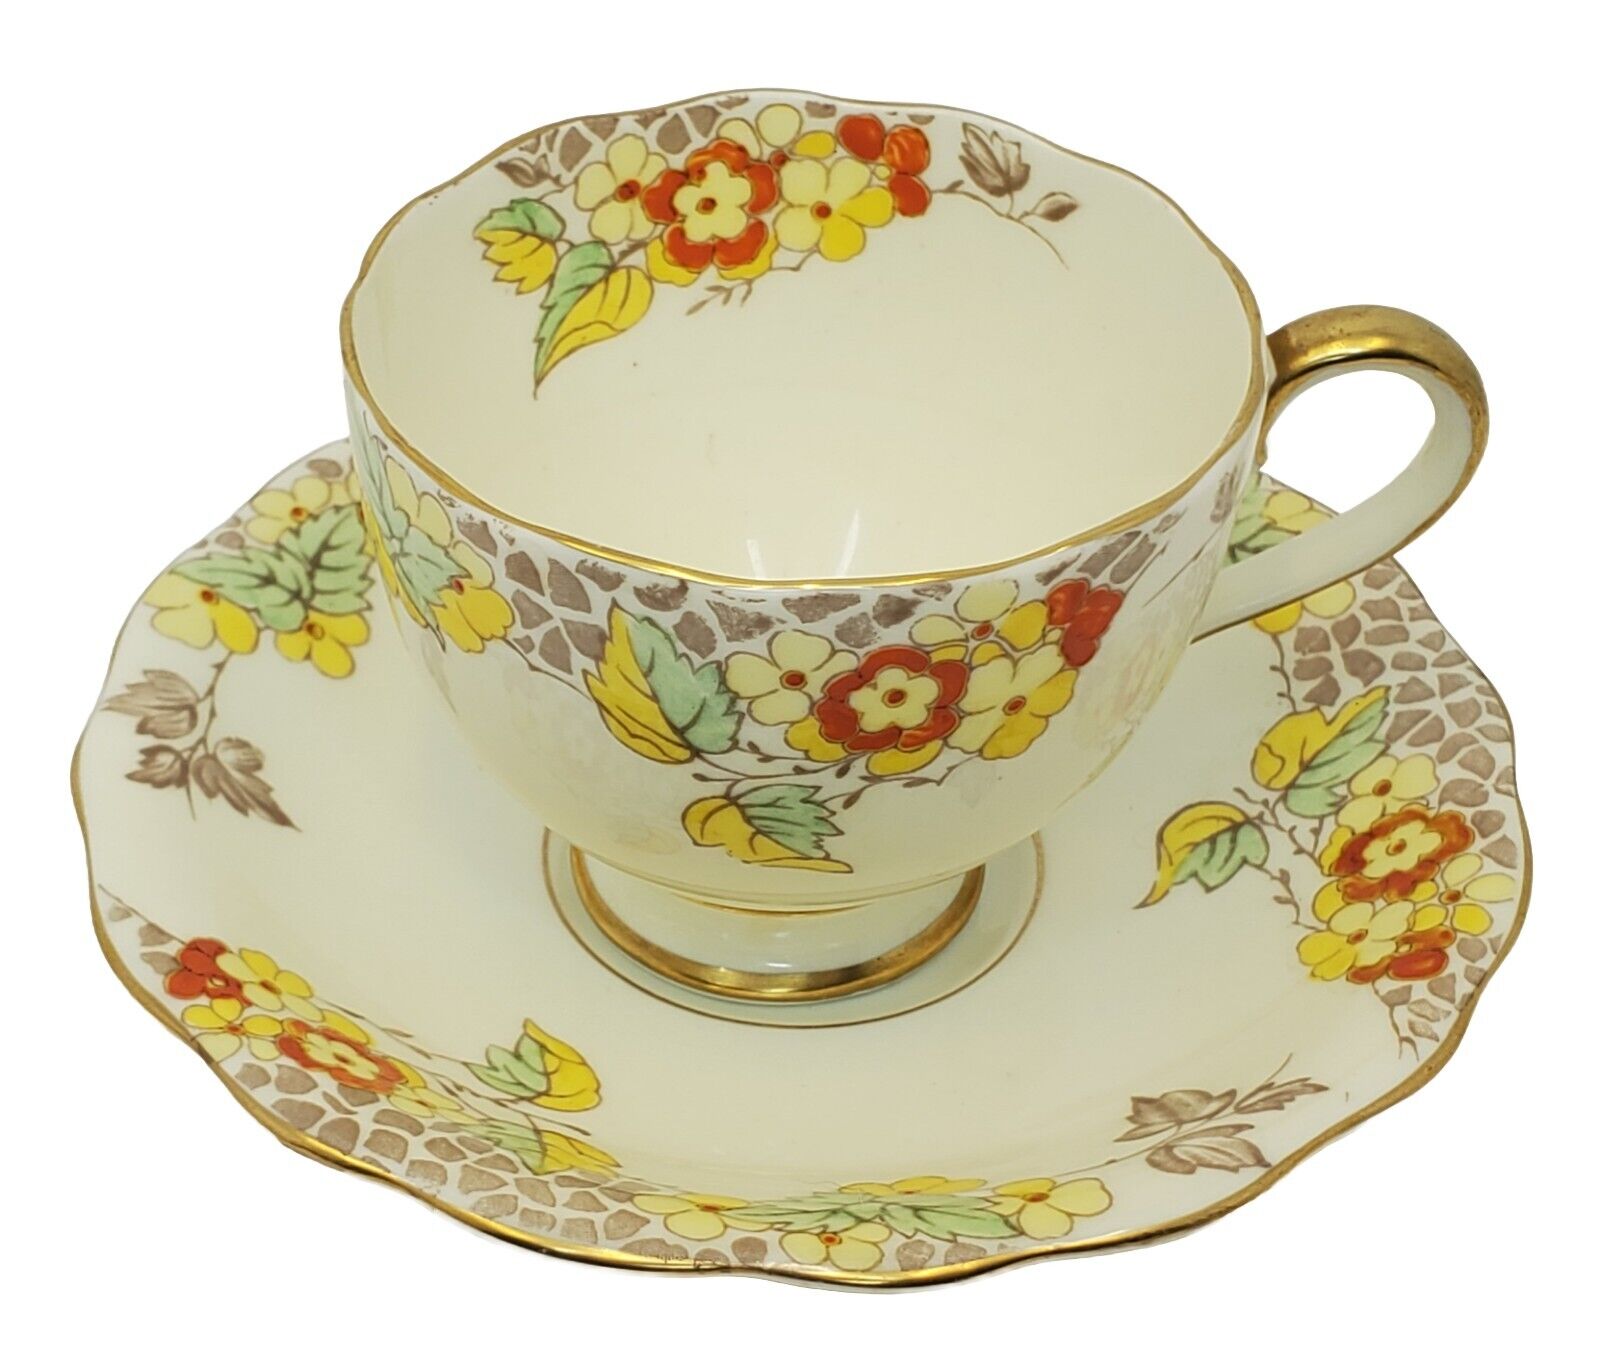 Cynthia Radfords Bone China Fenton England Teacup & Saucer Floral & Gold Accents